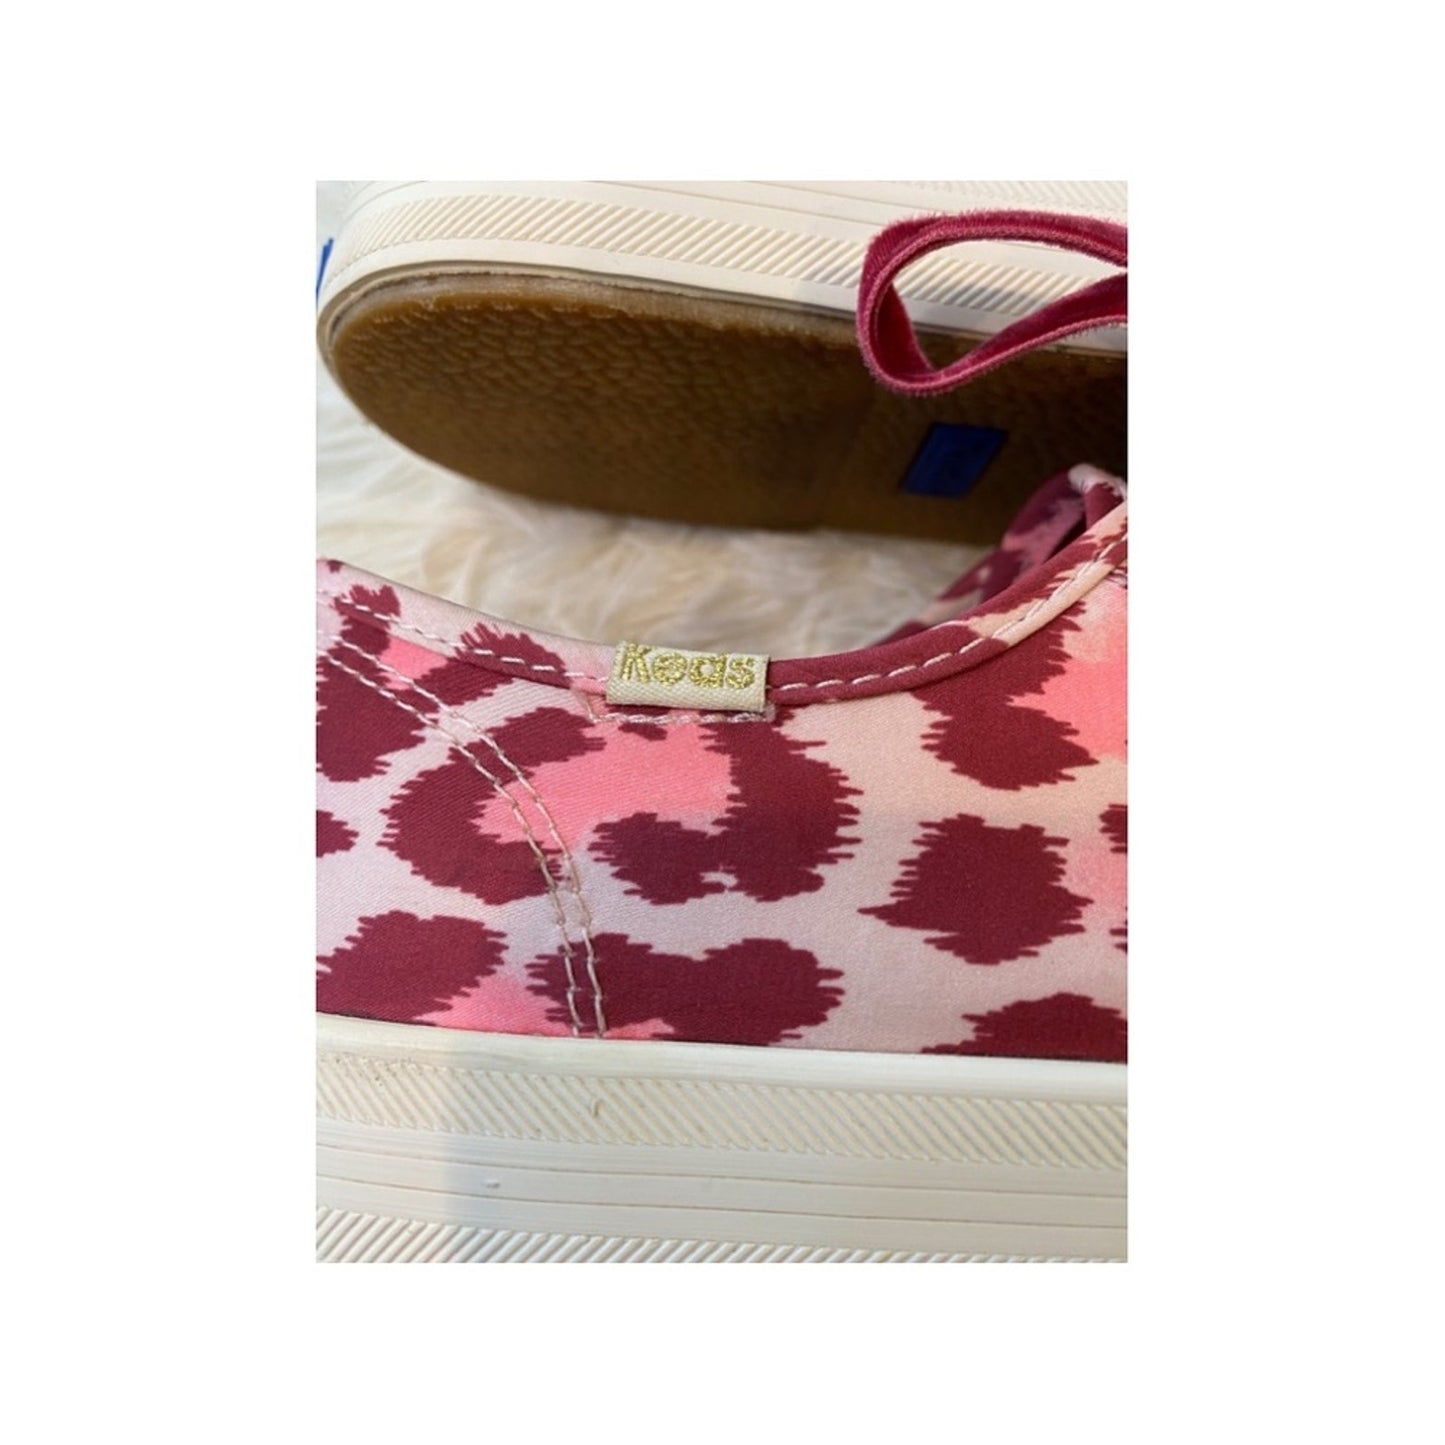 Kate Spade X Keds Pink/Burgundy Leopard Print Sneakers Size 9.5